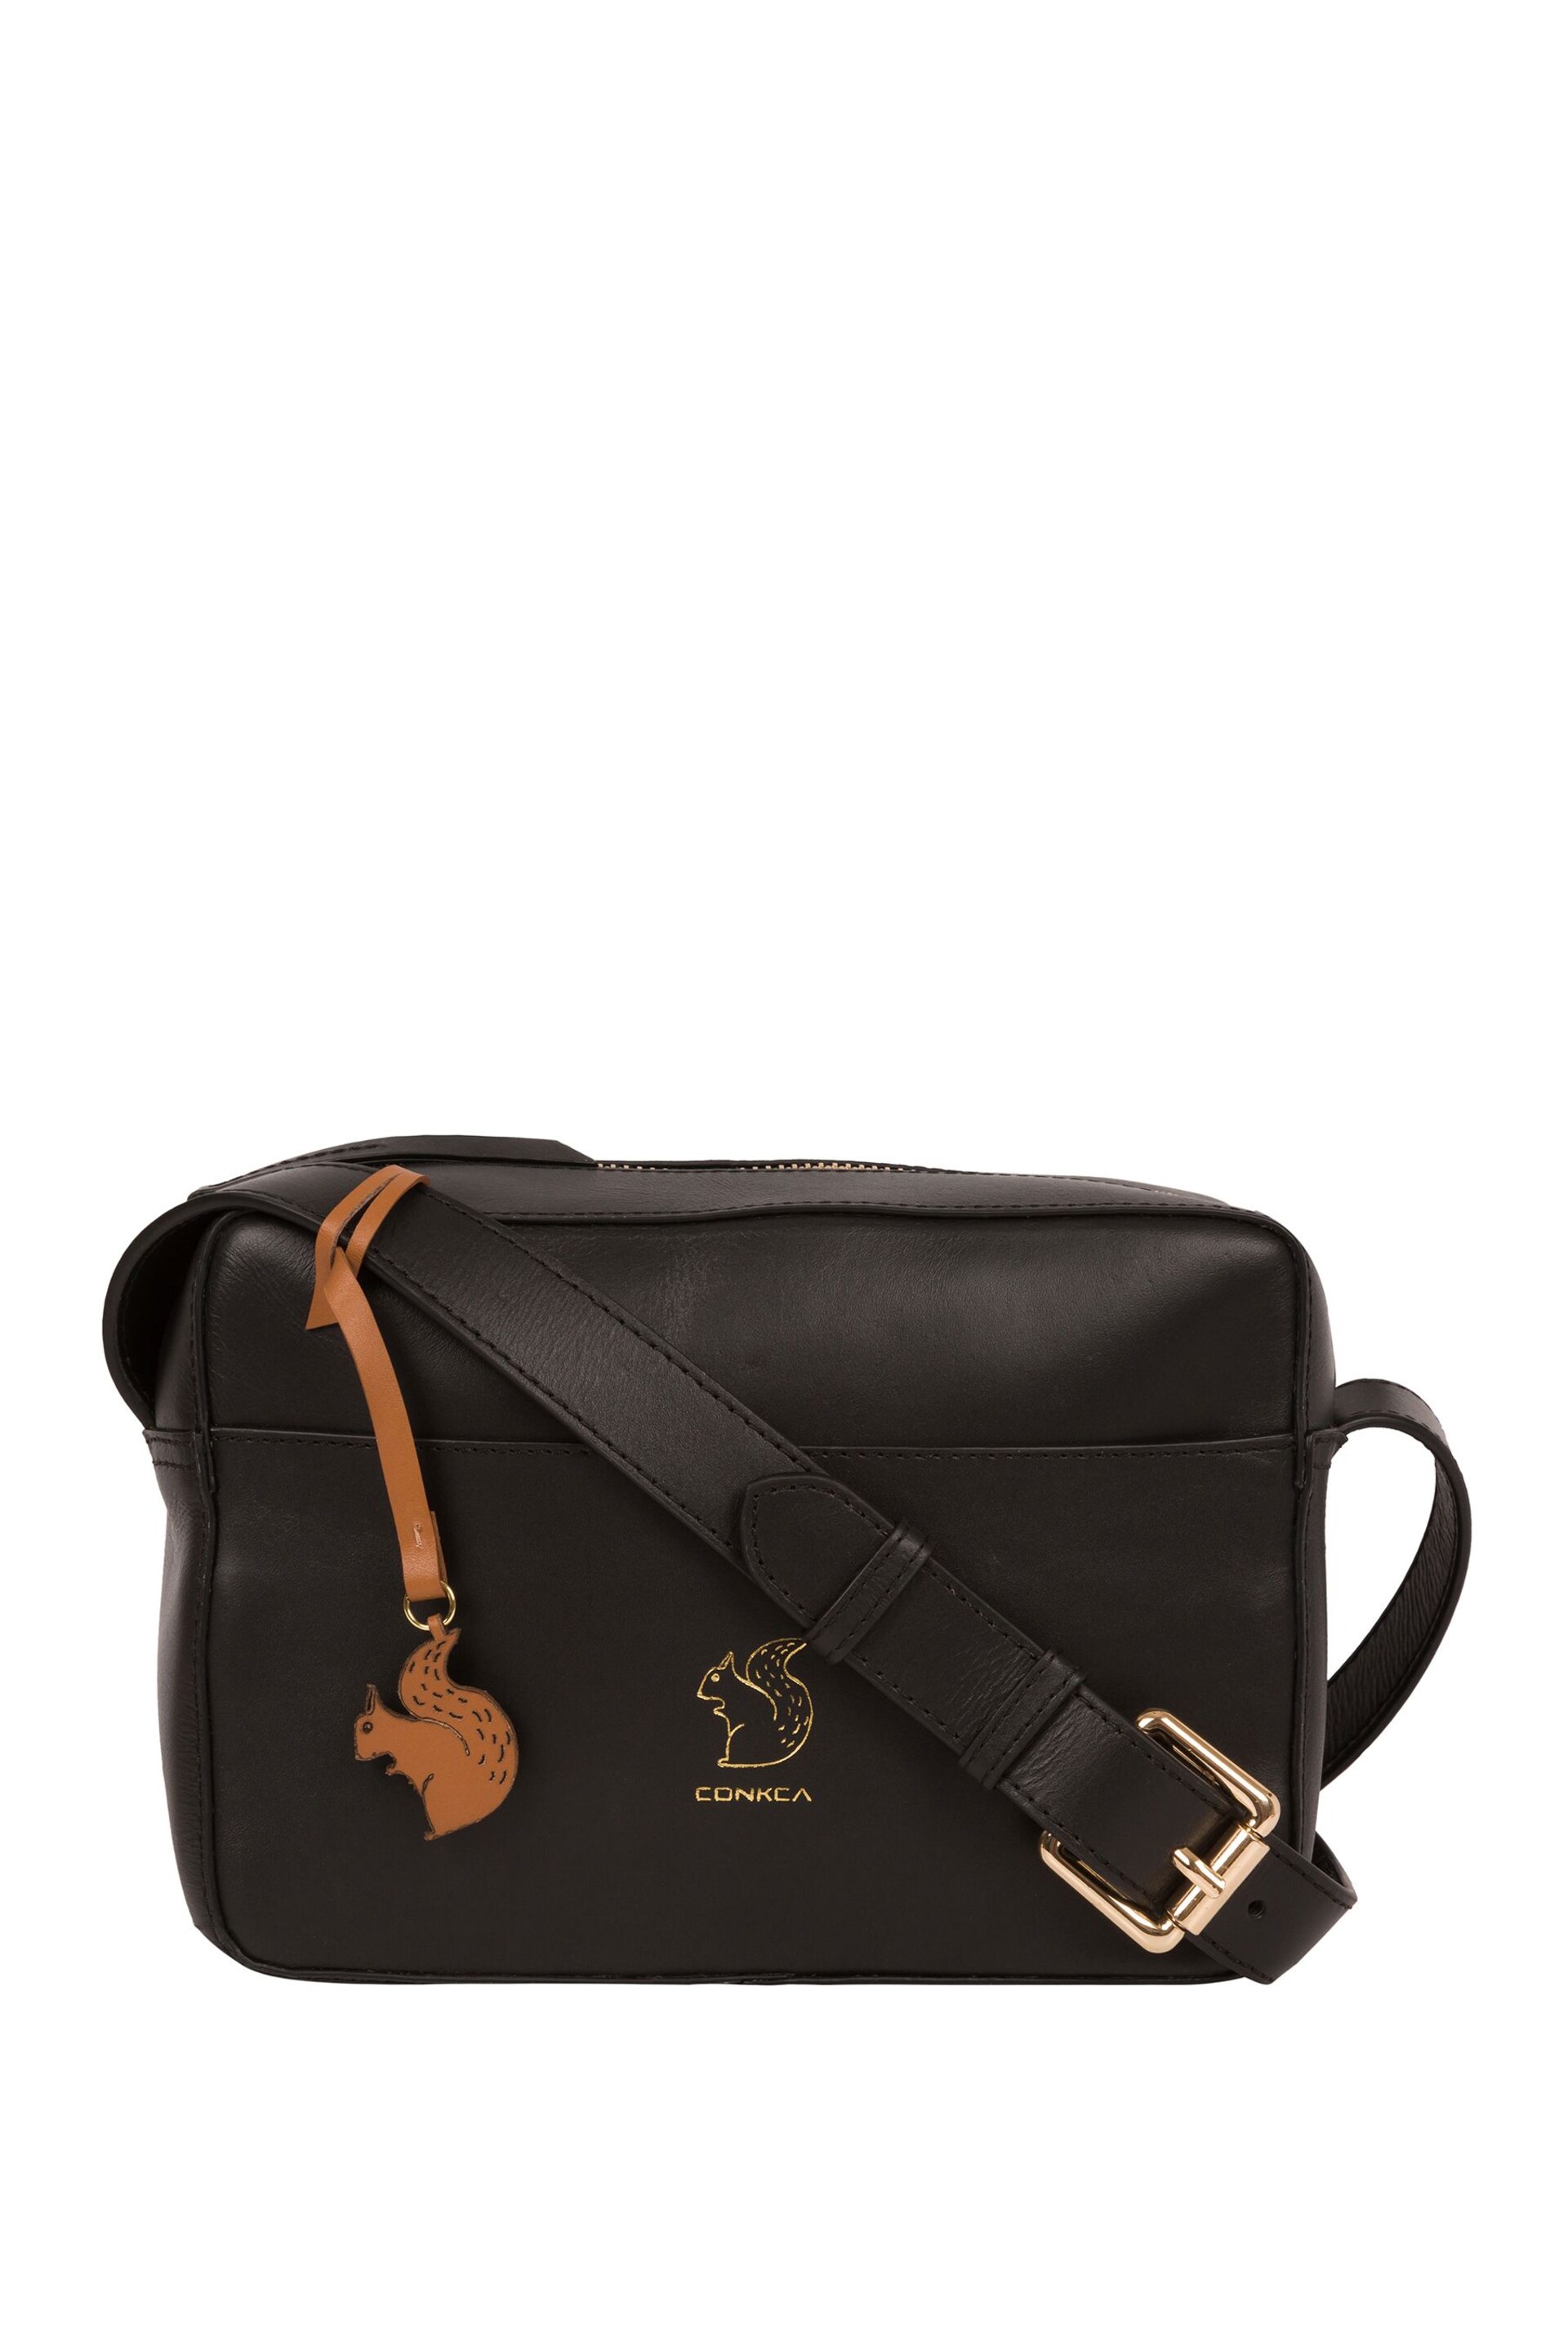 Conkca Tatum Vegetable-Tanned Leather Cross-Body Bag - Image 2 of 6